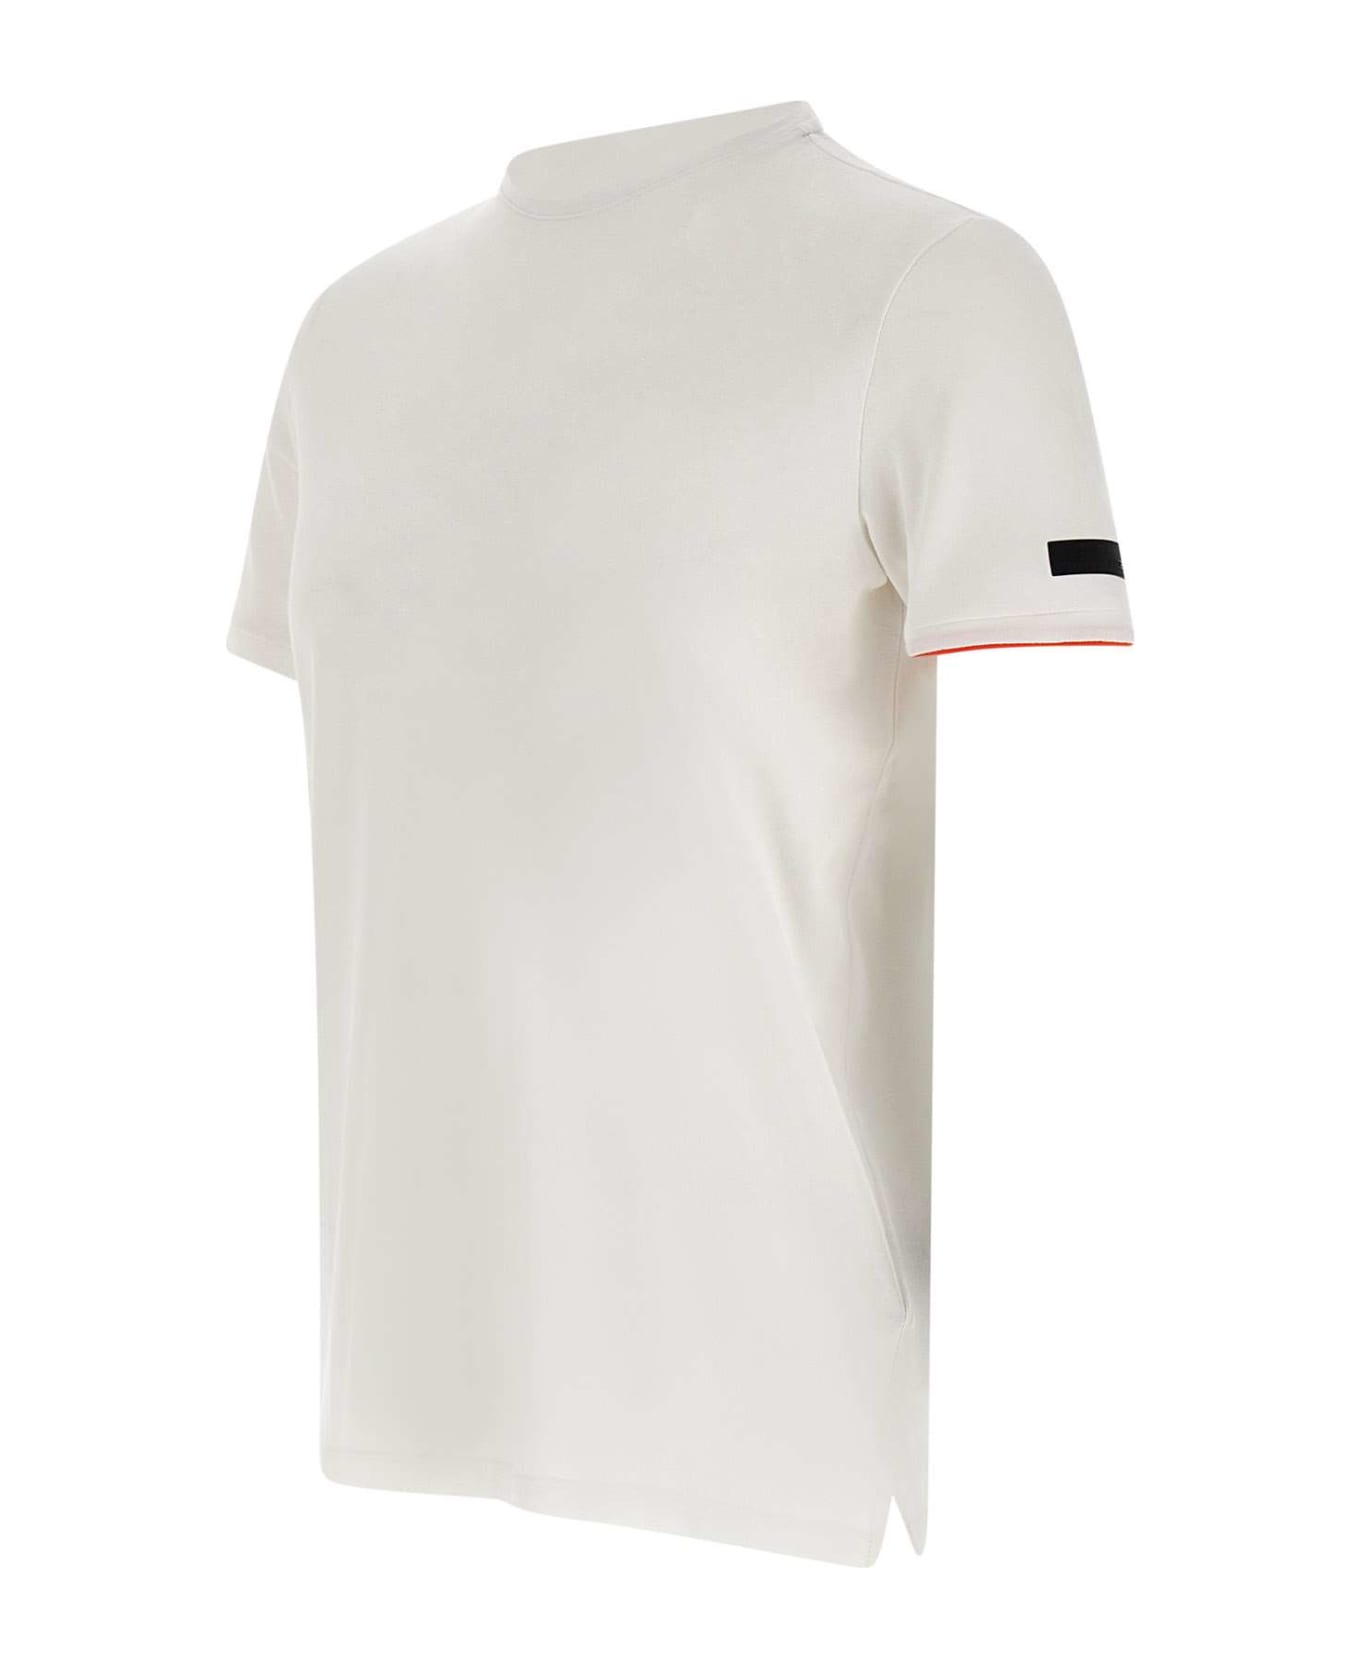 RRD - Roberto Ricci Design T-shirt 'shirty Macro' - Bianco シャツ